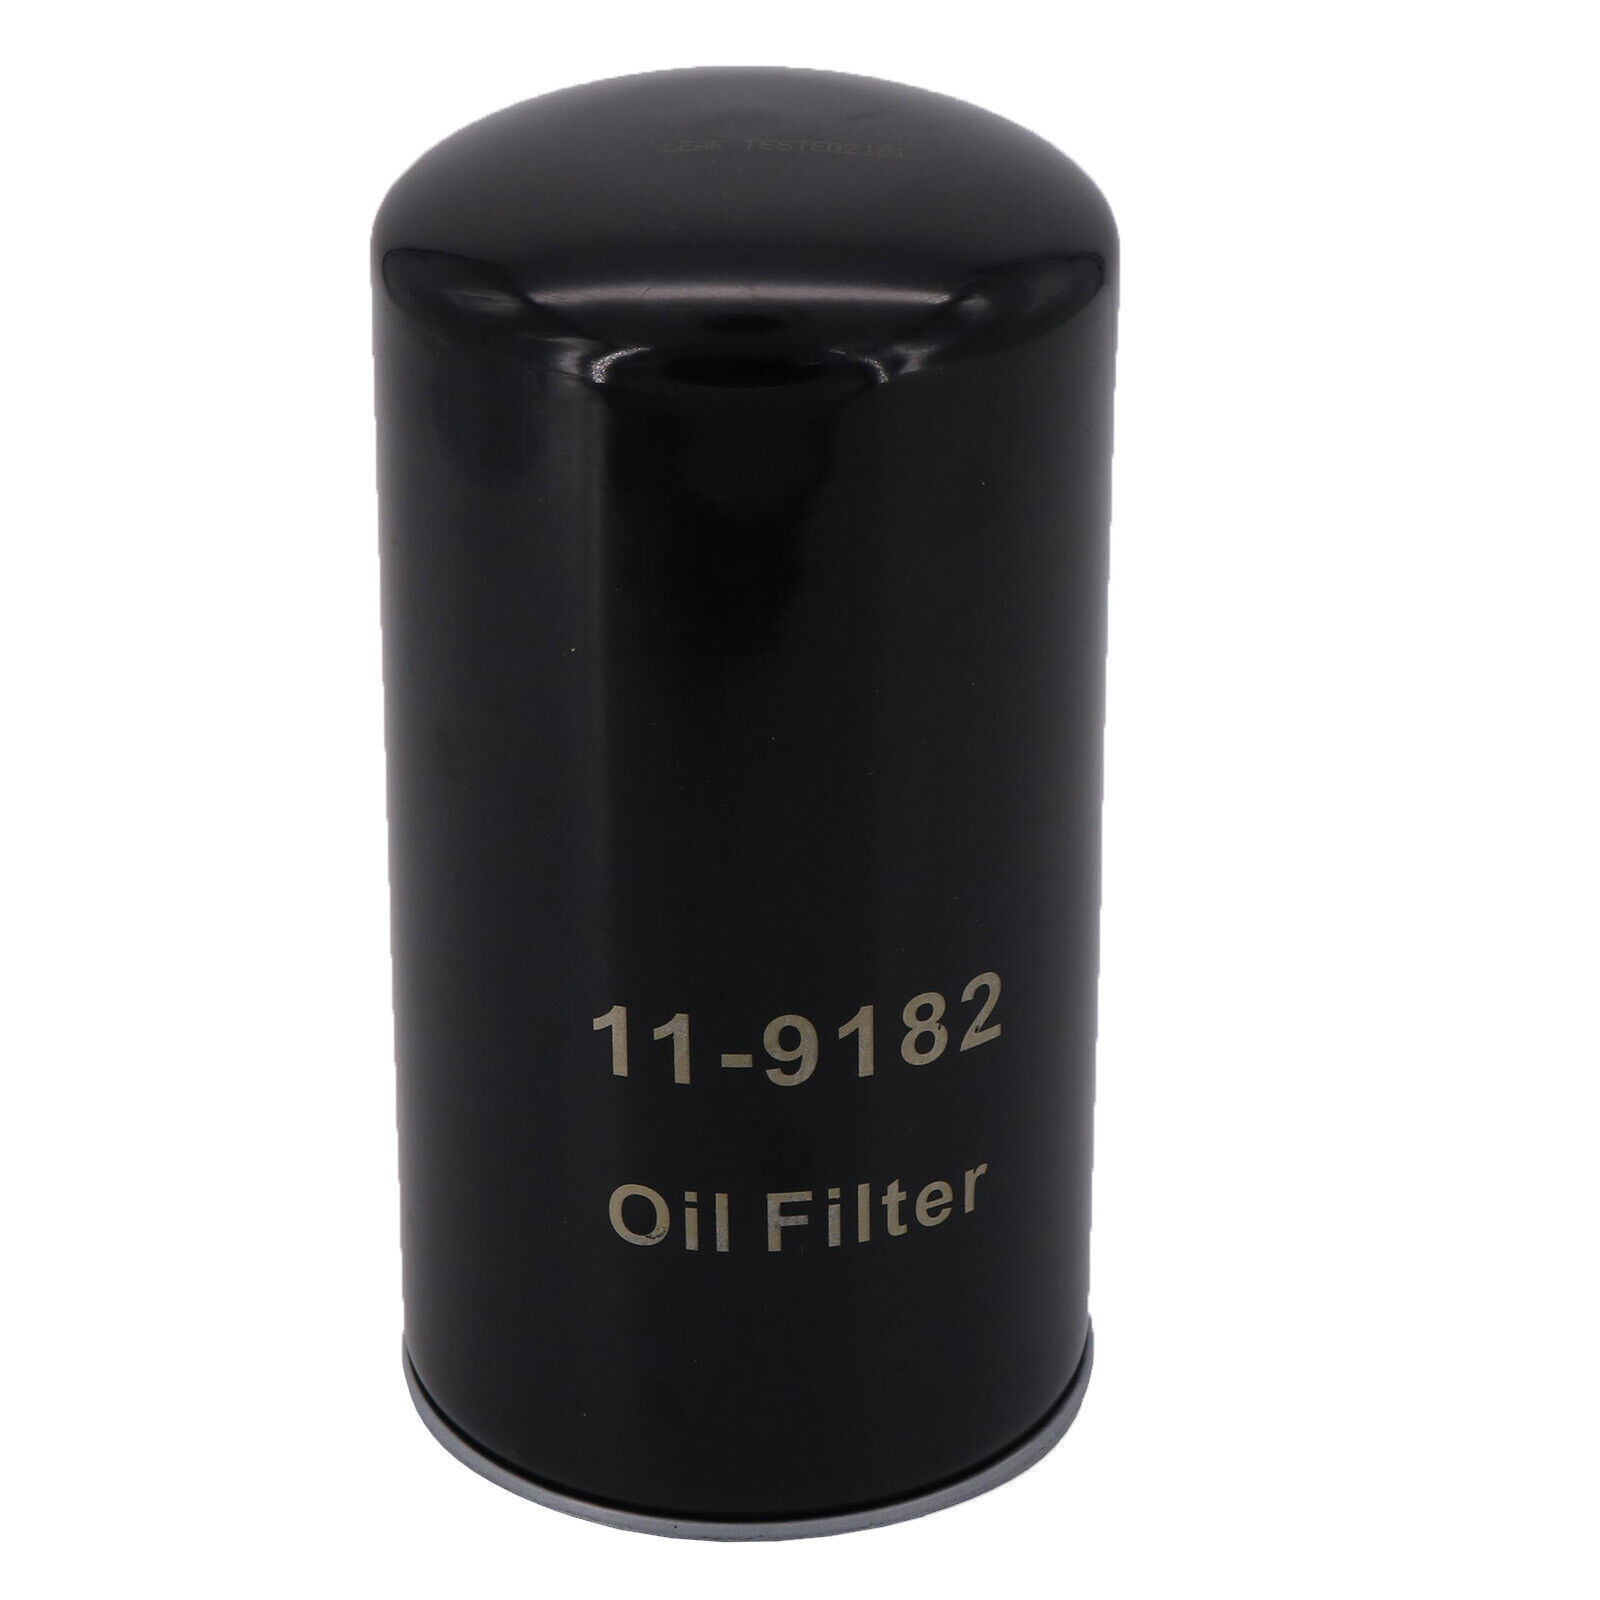 (11-9182) Filter Oil Thermo King SLX / SB / SL / Advancer
 

